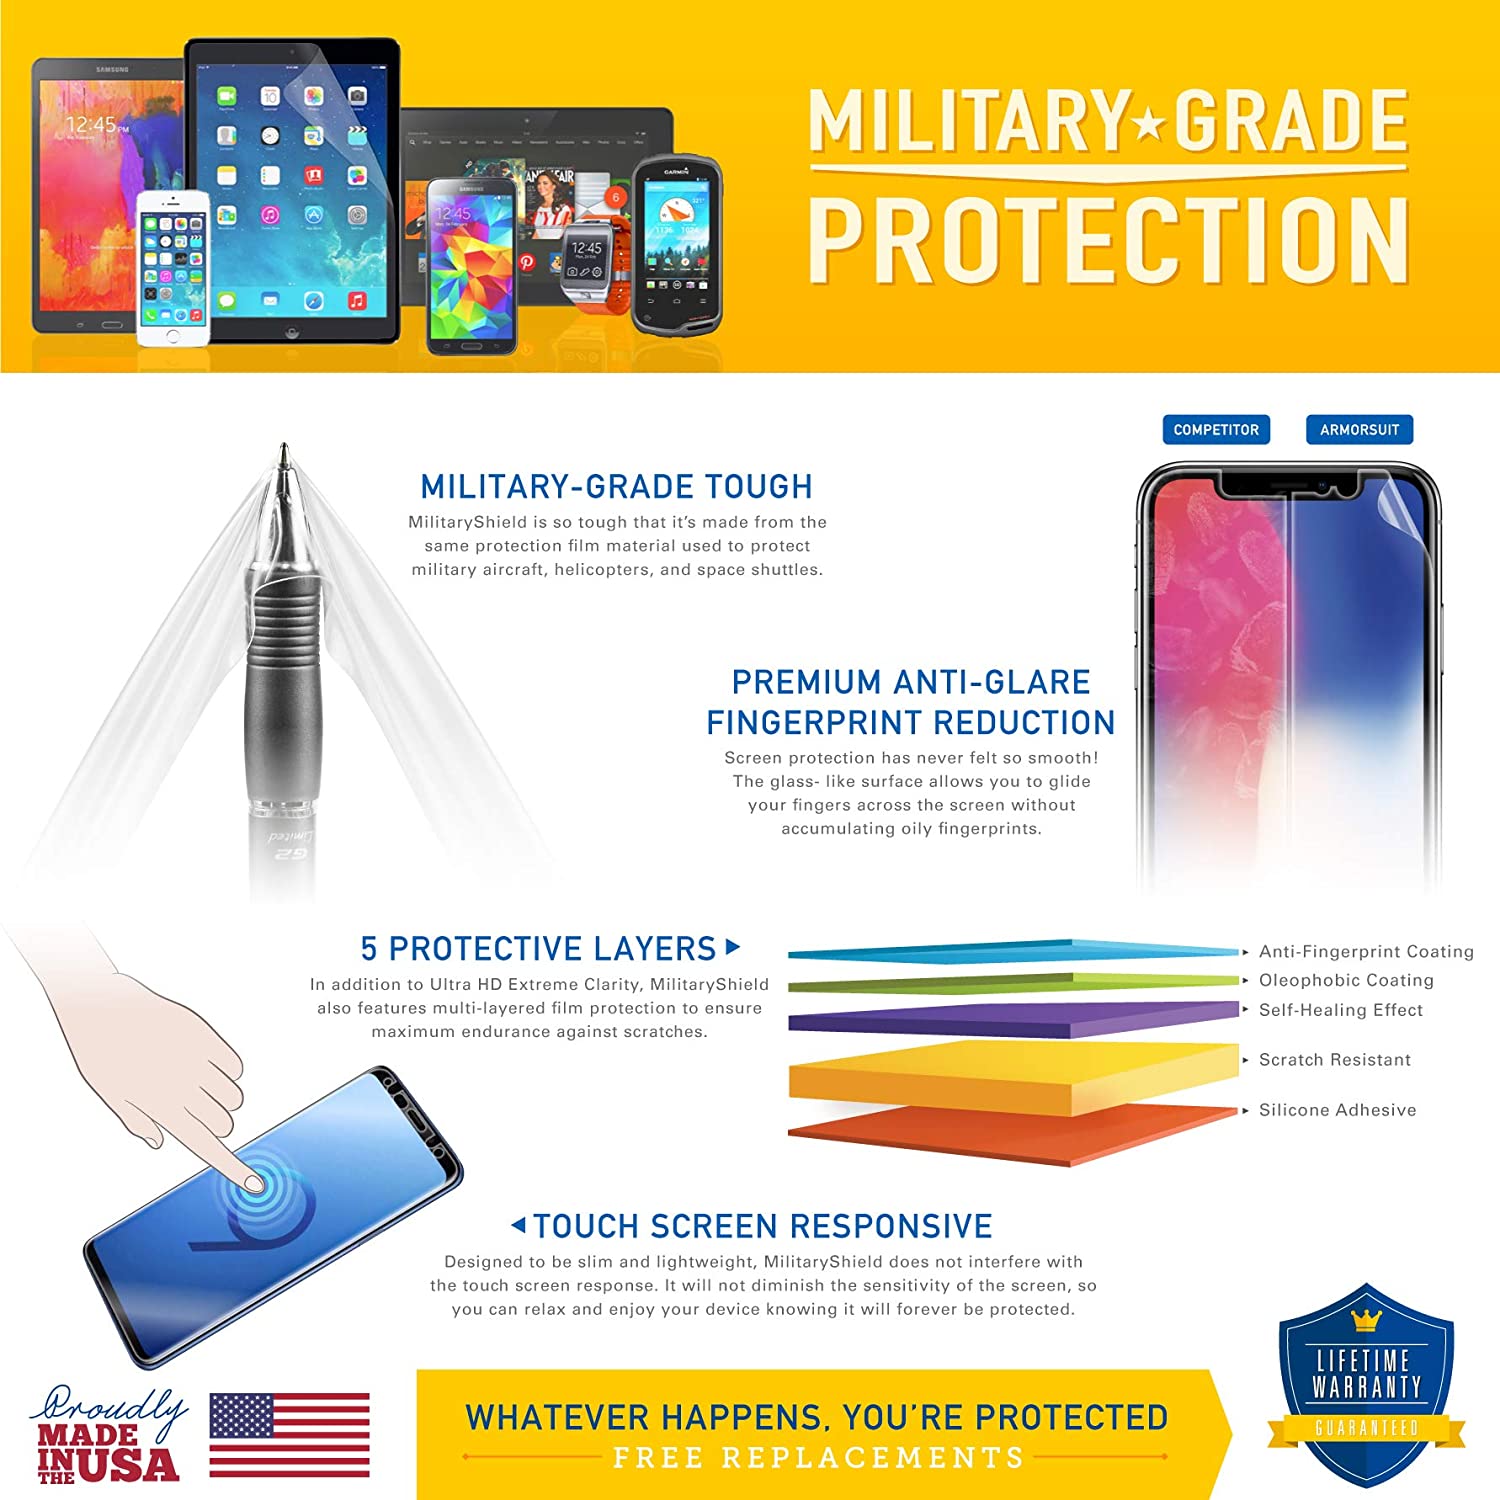 [2 Pack] Motorola Moto X (1st Generation) Screen Protector